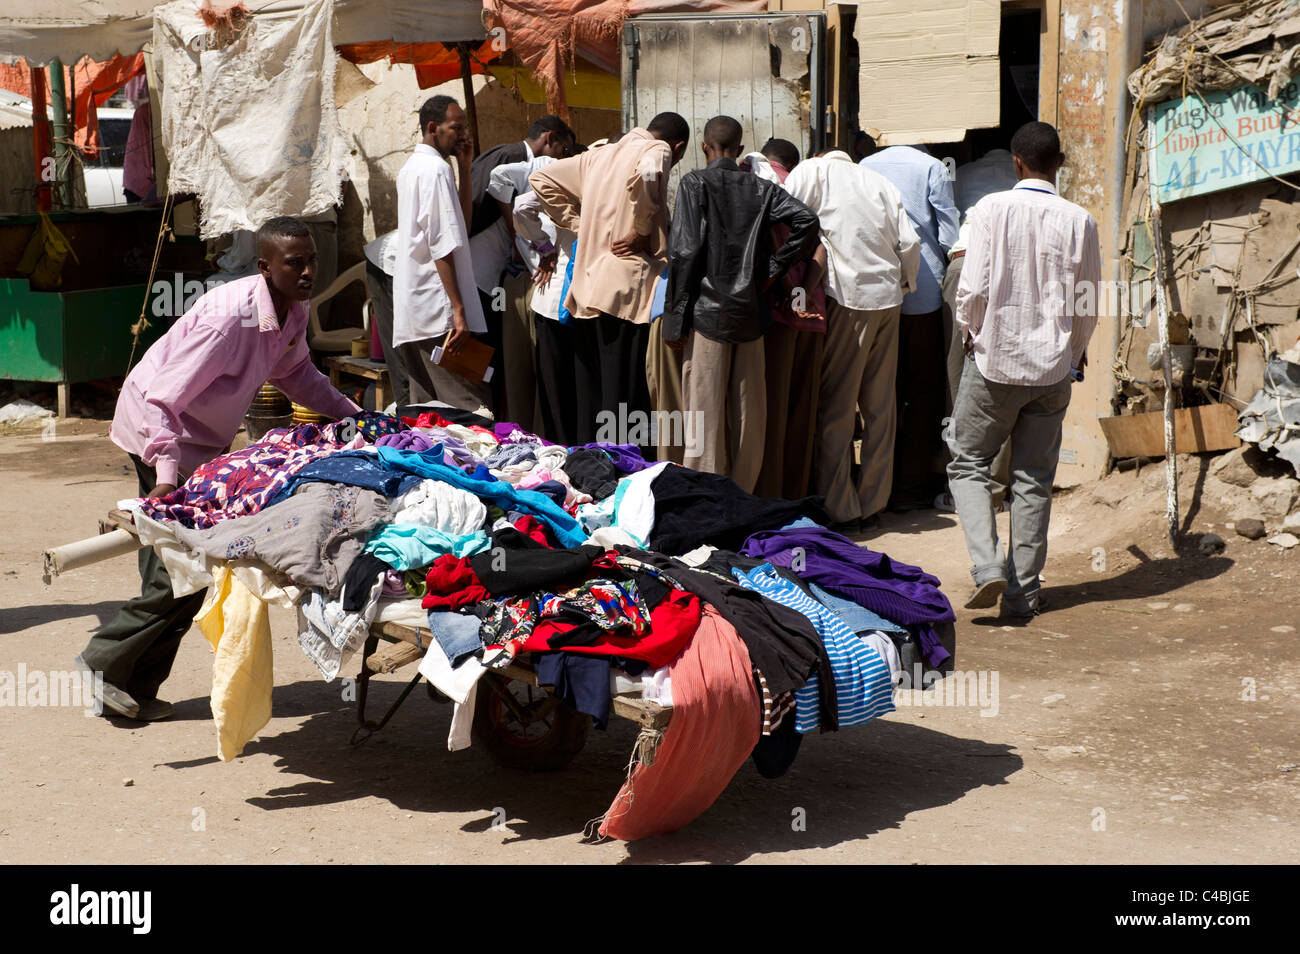 Clothes vendor in the market, Hargeisa, Somaliland, Somalia Stock Photo